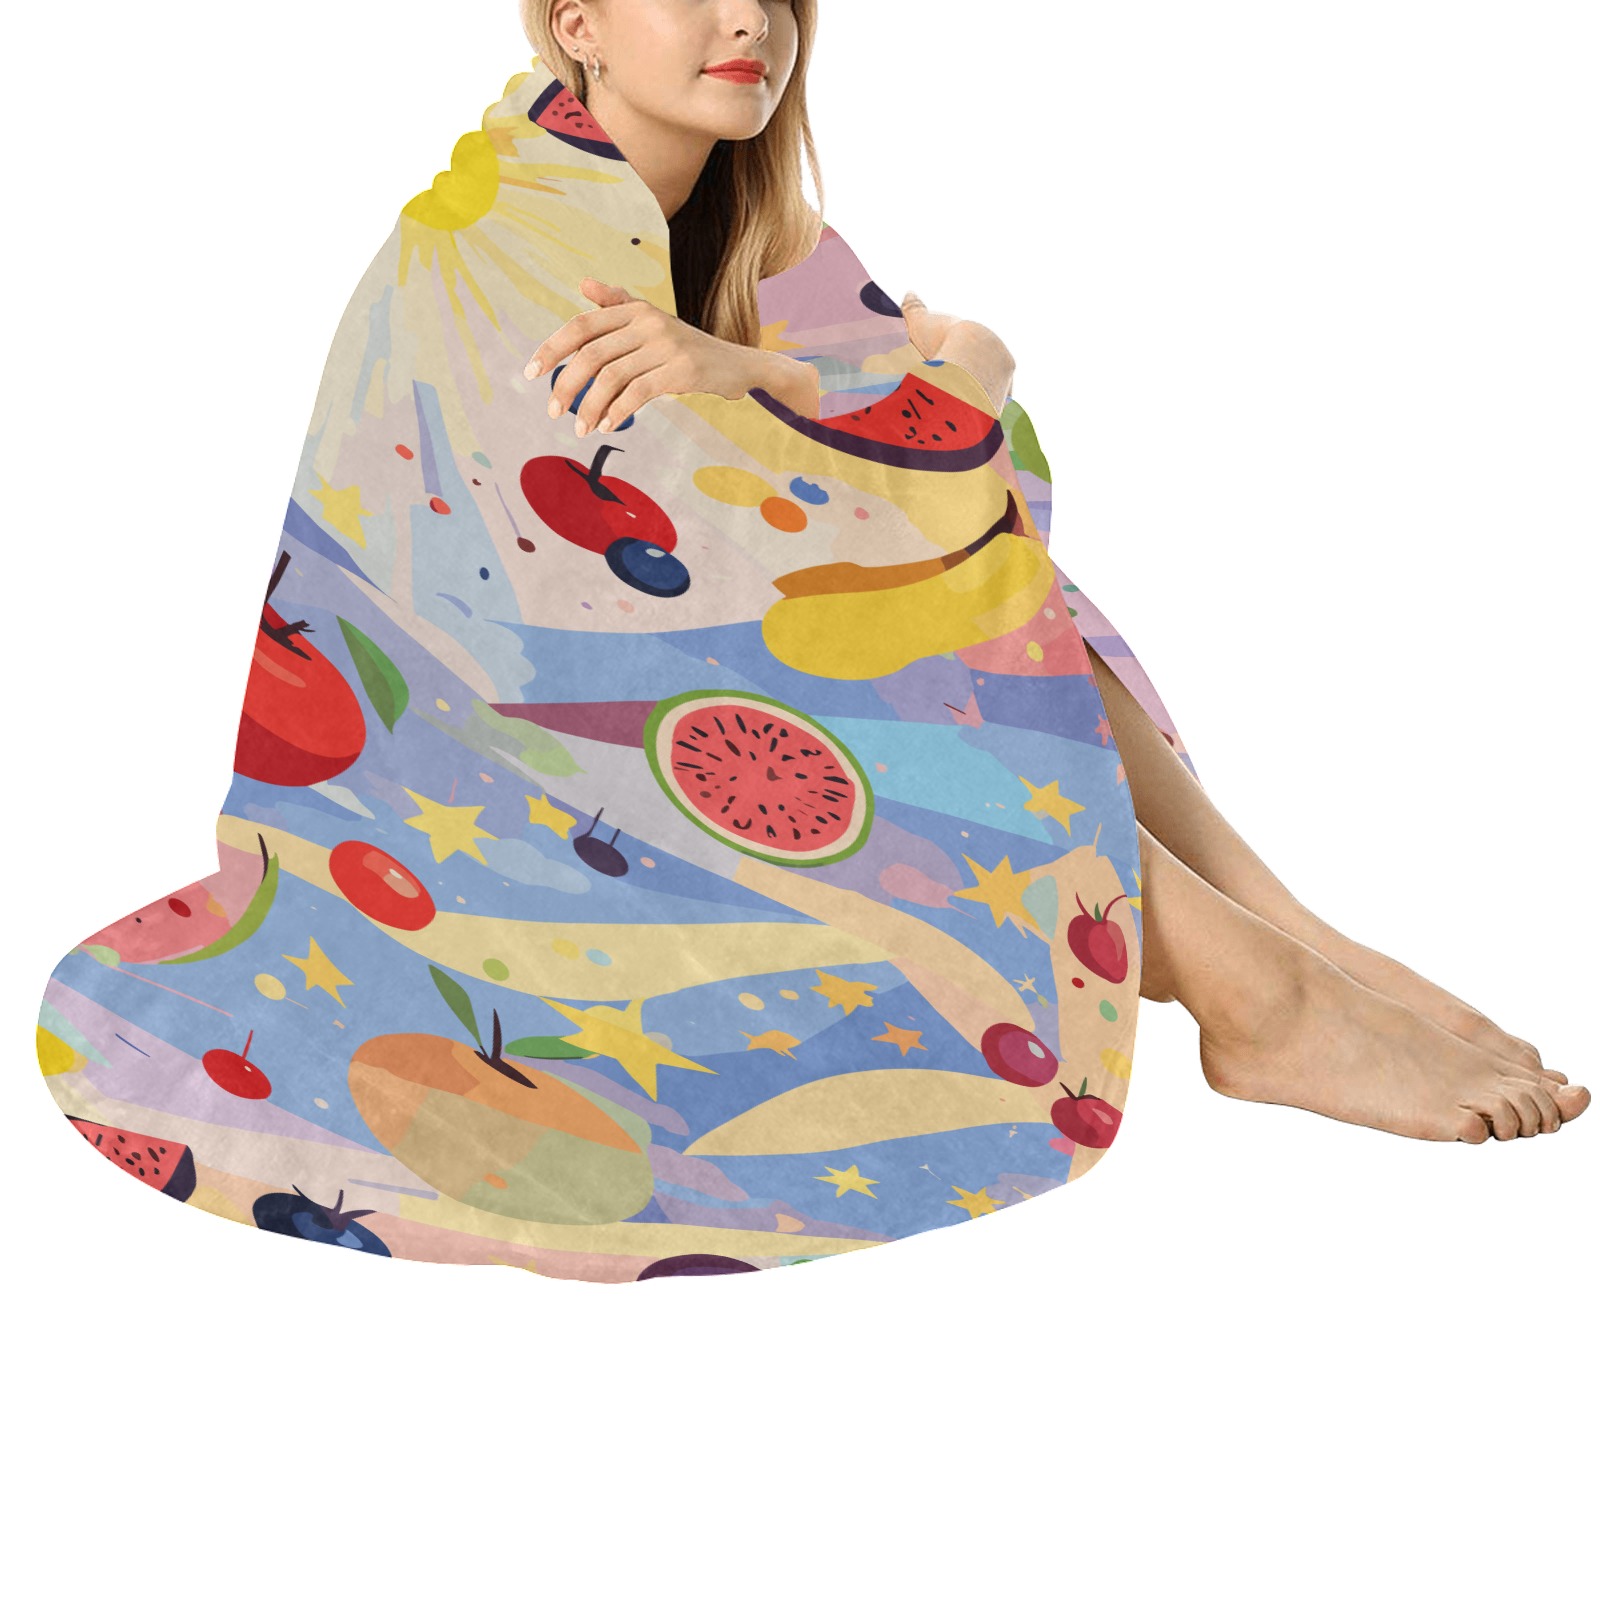 Colorful fruits, shining sun, stars. Positive art. Circular Ultra-Soft Micro Fleece Blanket 60"